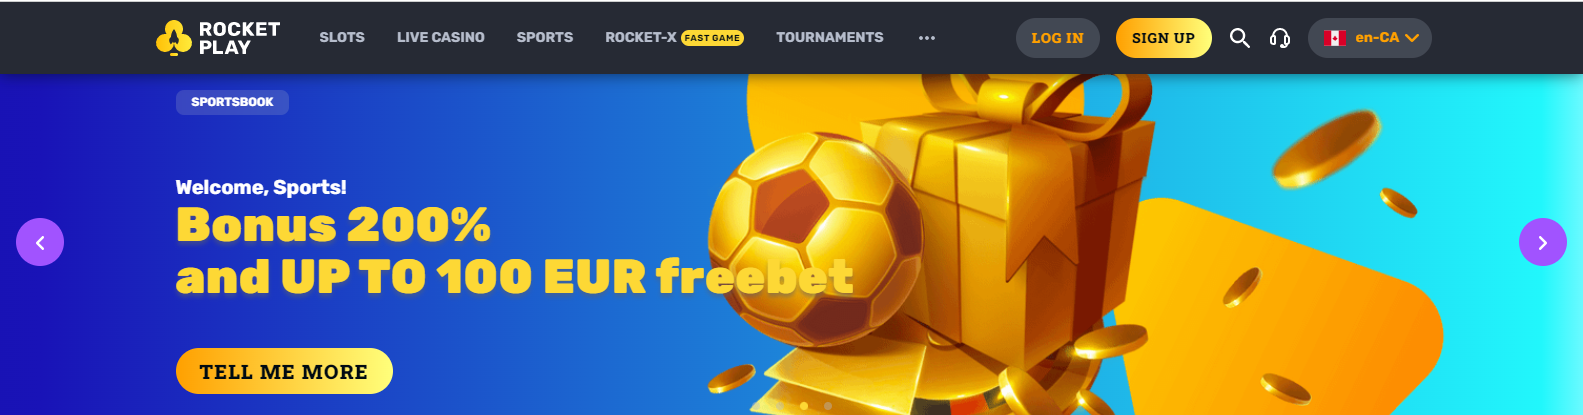 RocketPlay Casino Home Page